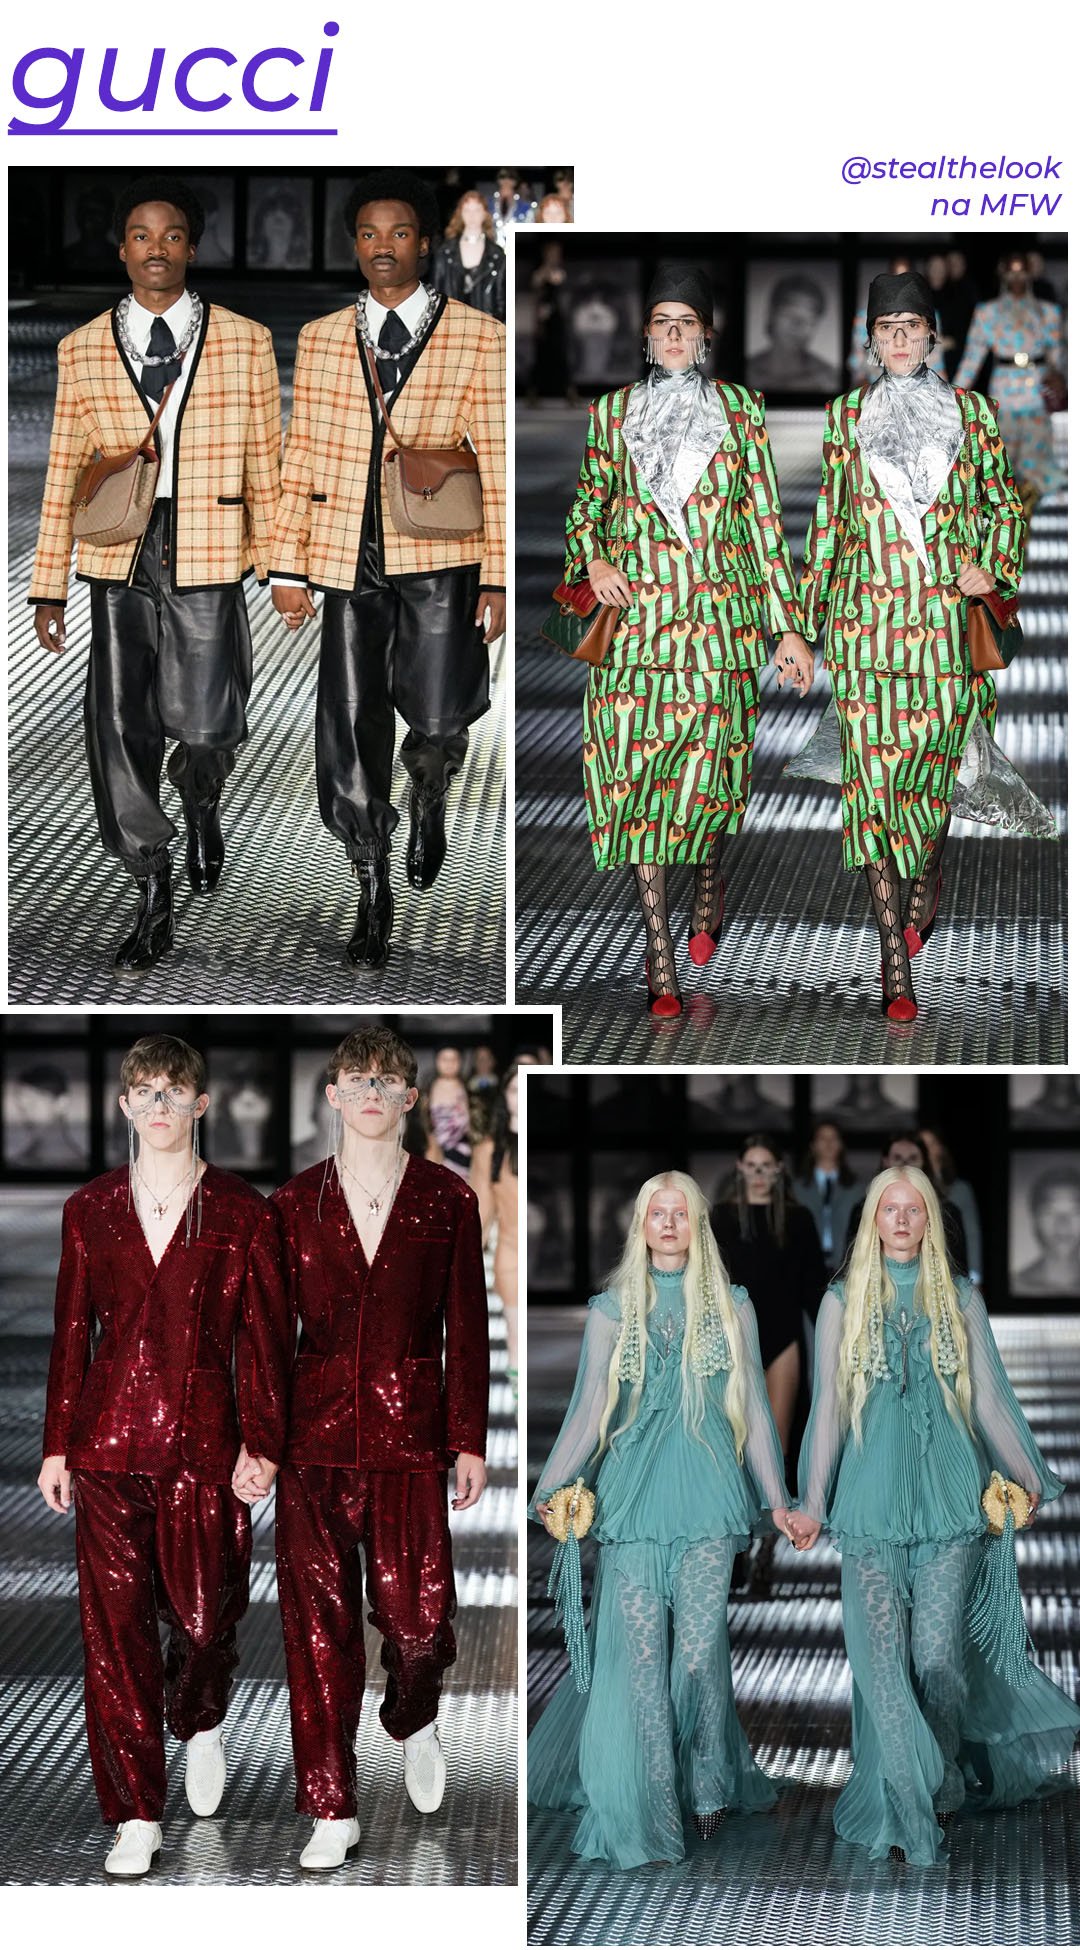 Gucci S/S 2023 - roupas diversas - Milano Fashion Week - Primavera - modelo andando pela passarela - https://stealthelook.com.br